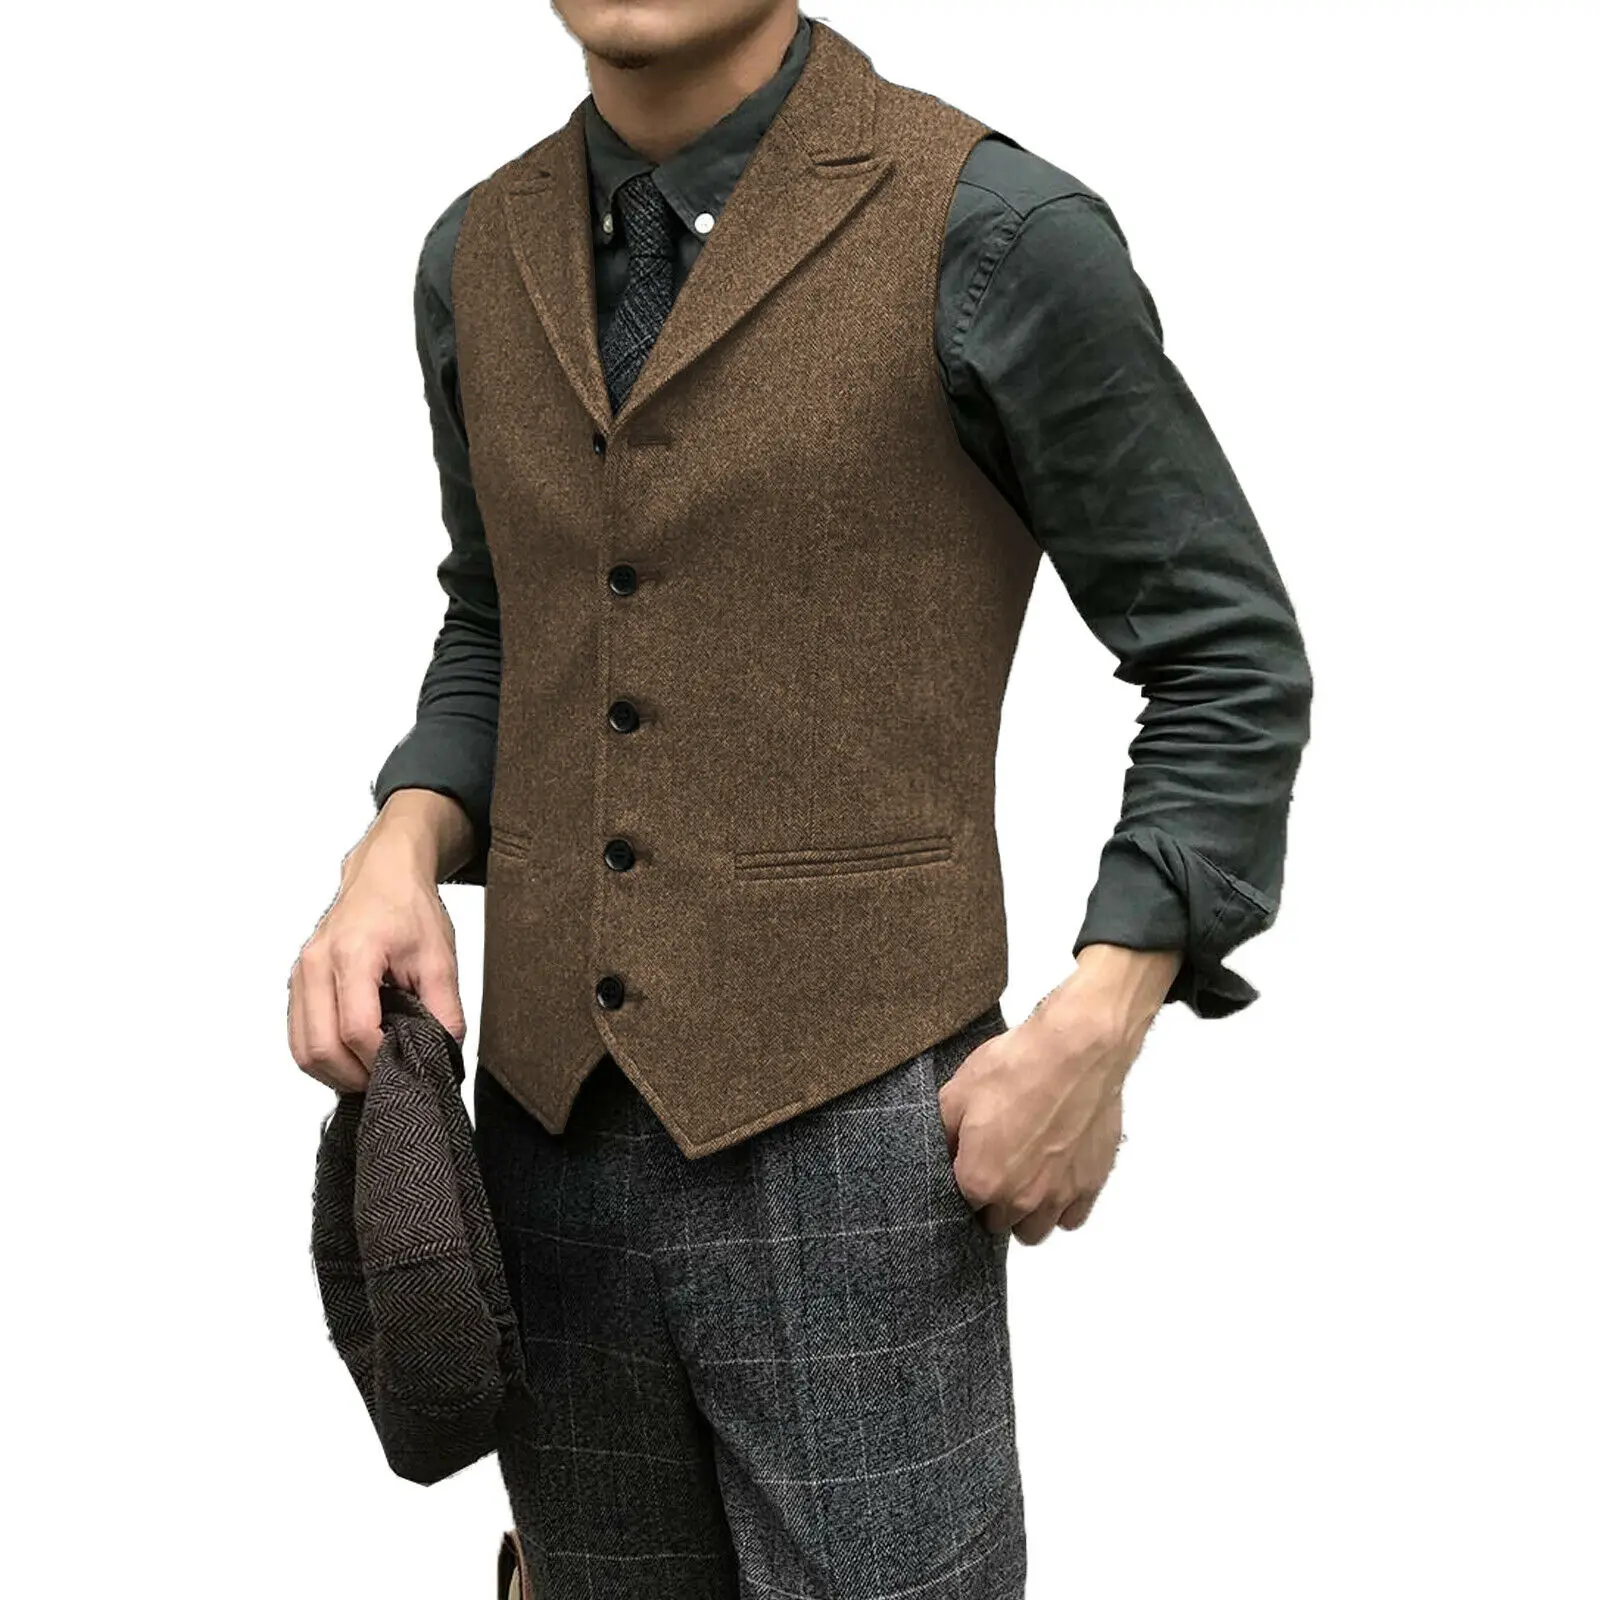 Men's Suit Vest Wedding Groom Tuxedo Business Slim Formal Sleeveless Jacket Steampunk Waistcoat